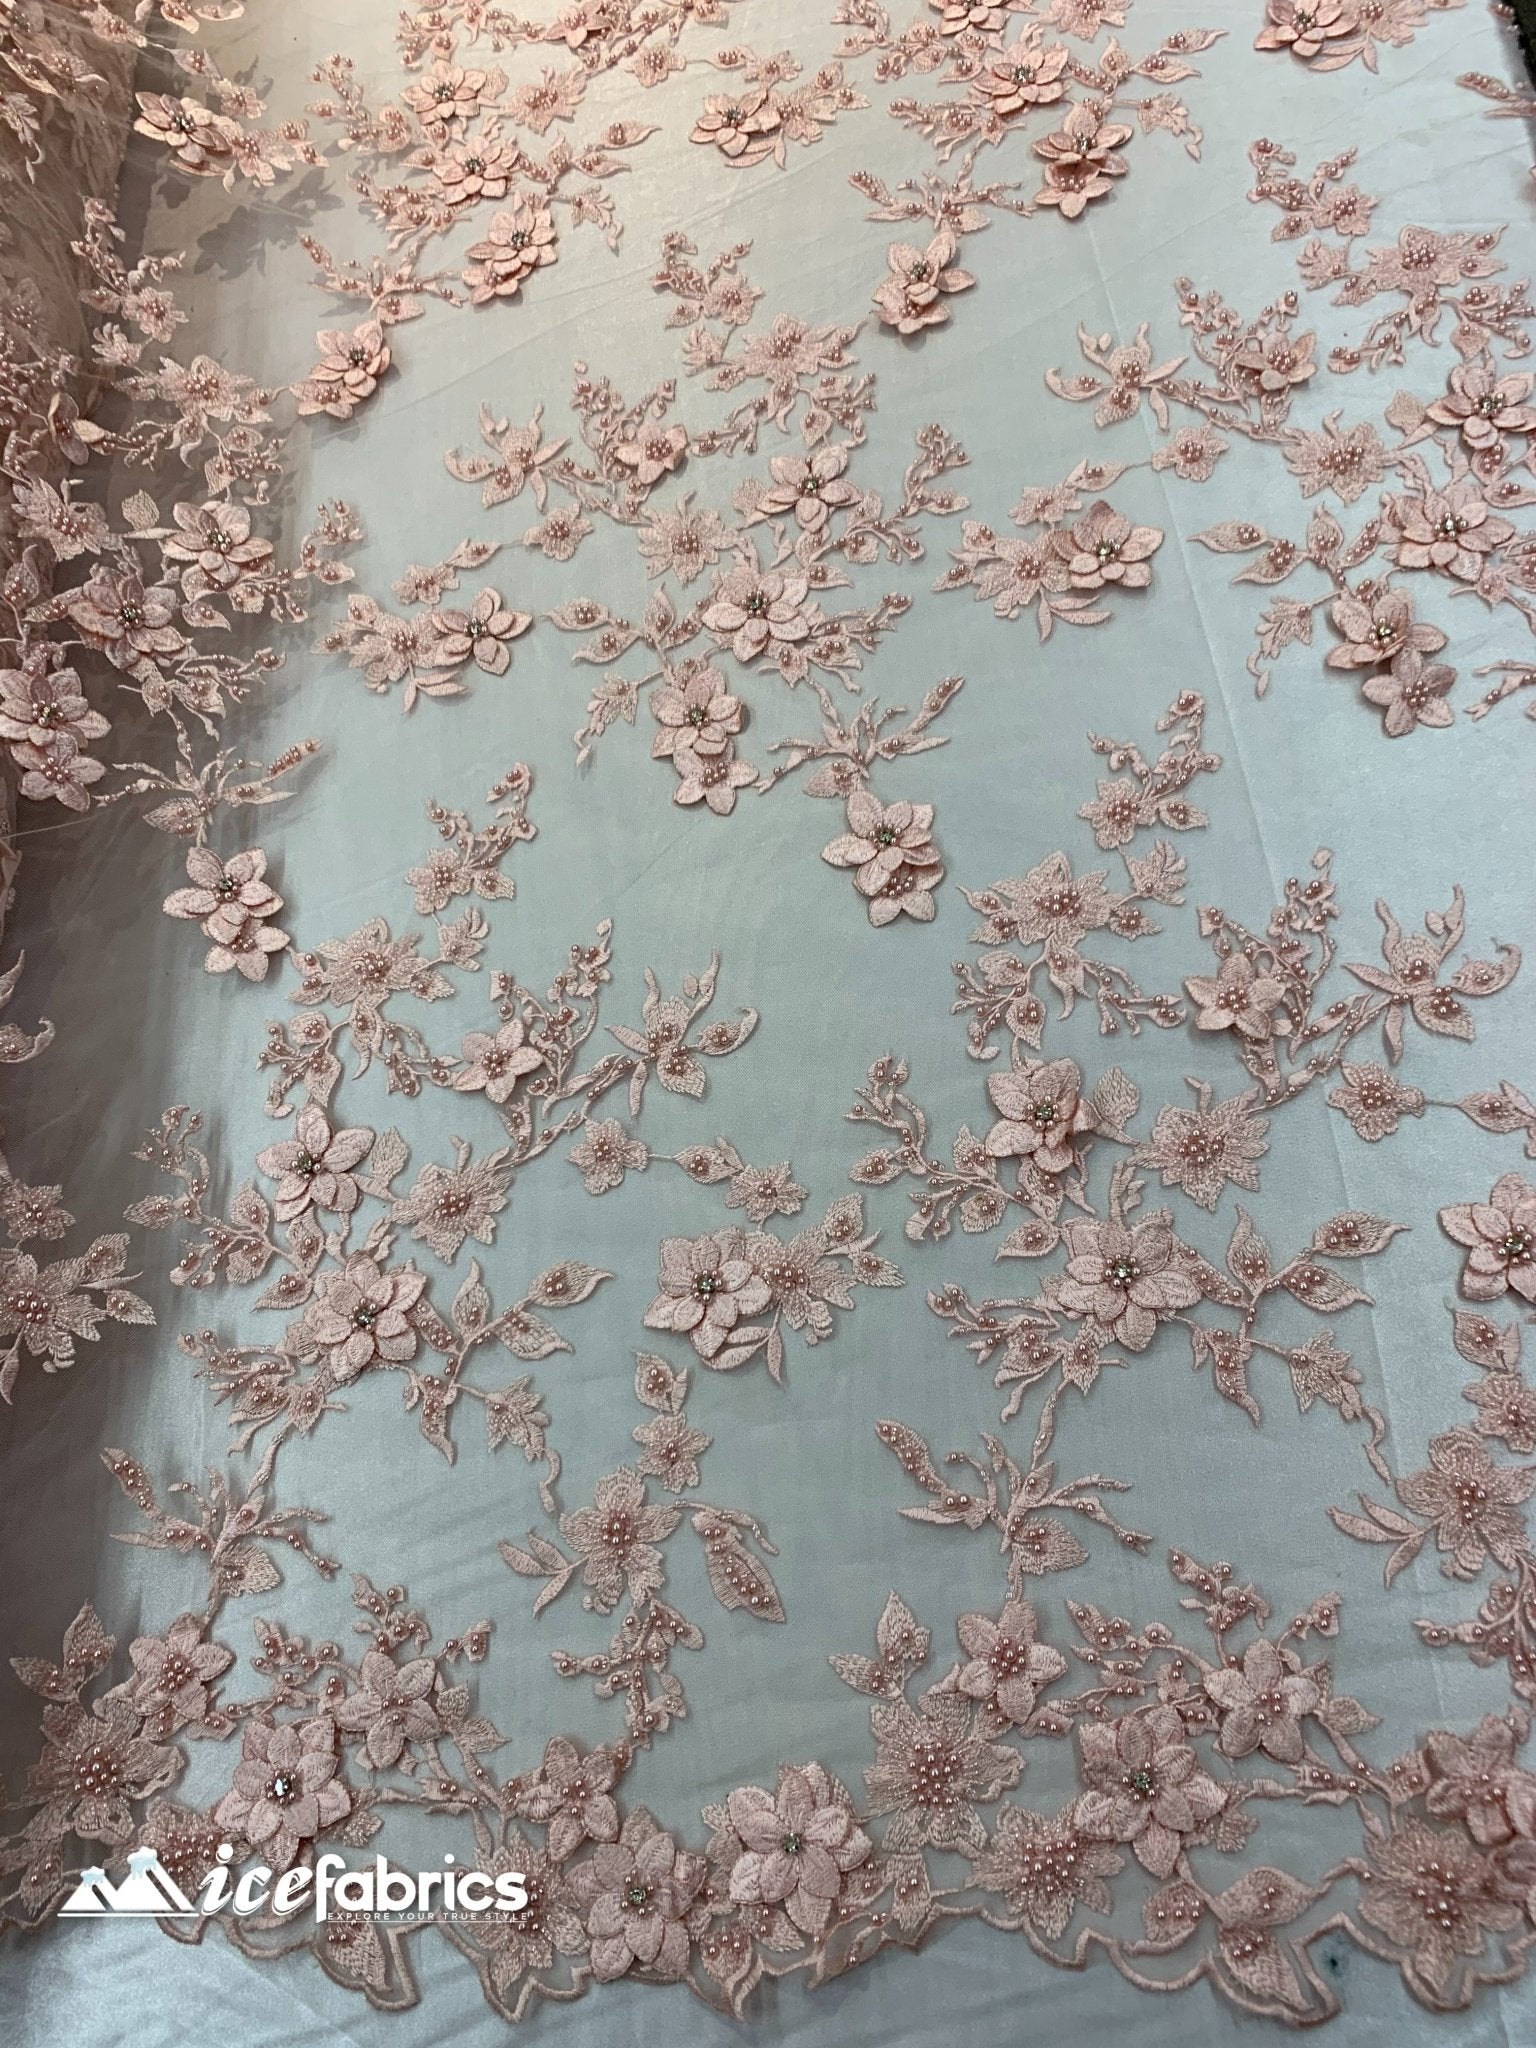 Embroidered Fabric/ 3D Flowers Beaded Fabric/ Lace Fabric/ PinkICE FABRICSICE FABRICSPinkEmbroidered Fabric/ 3D Flowers Beaded Fabric/ Lace Fabric/ Pink ICE FABRICS